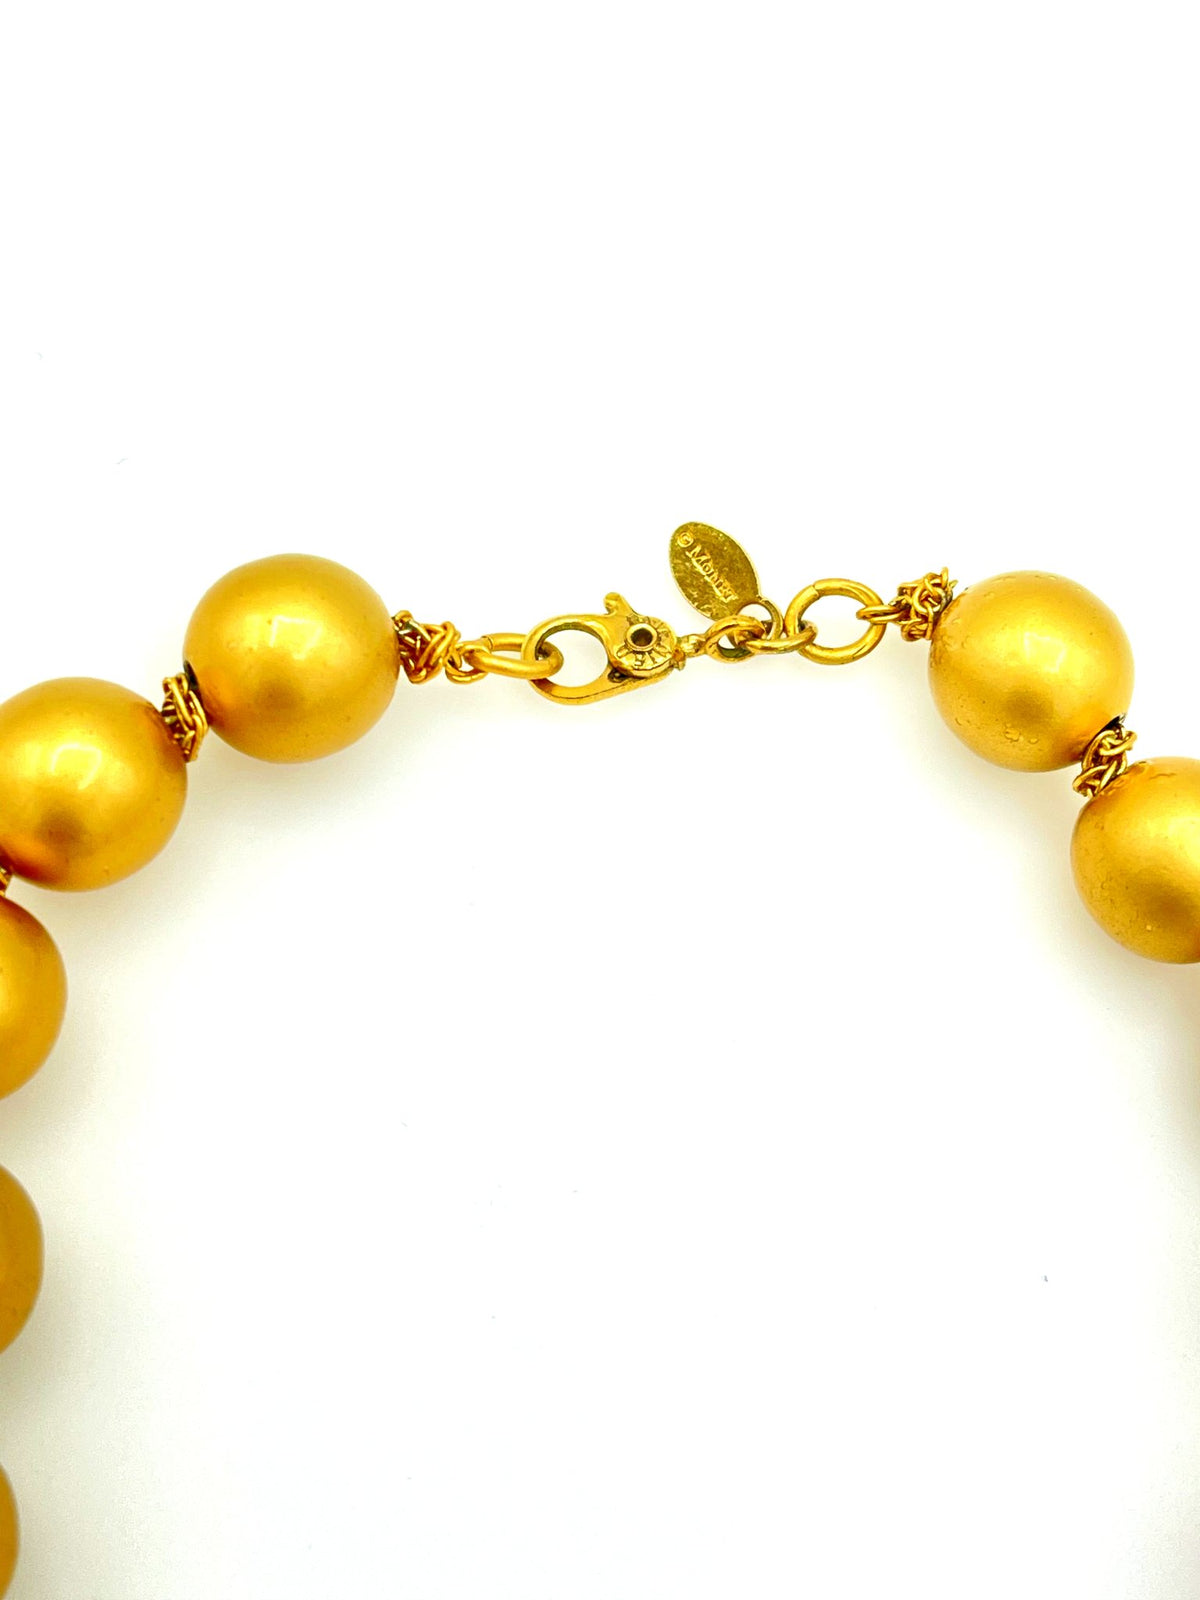 Monet Matt Gold Ball Chain Vintage Necklace - 24 Wishes Vintage Jewelry